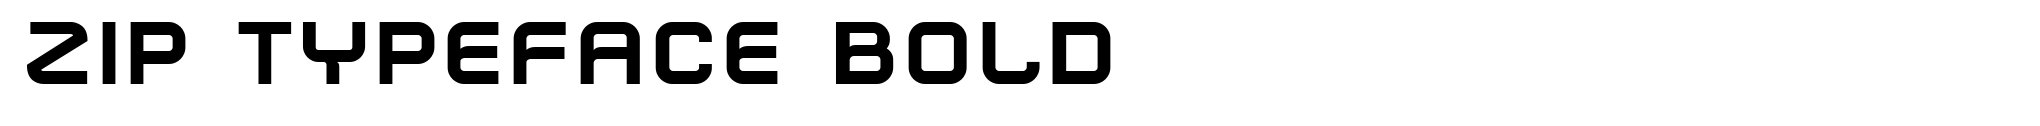 Zip Typeface Bold image